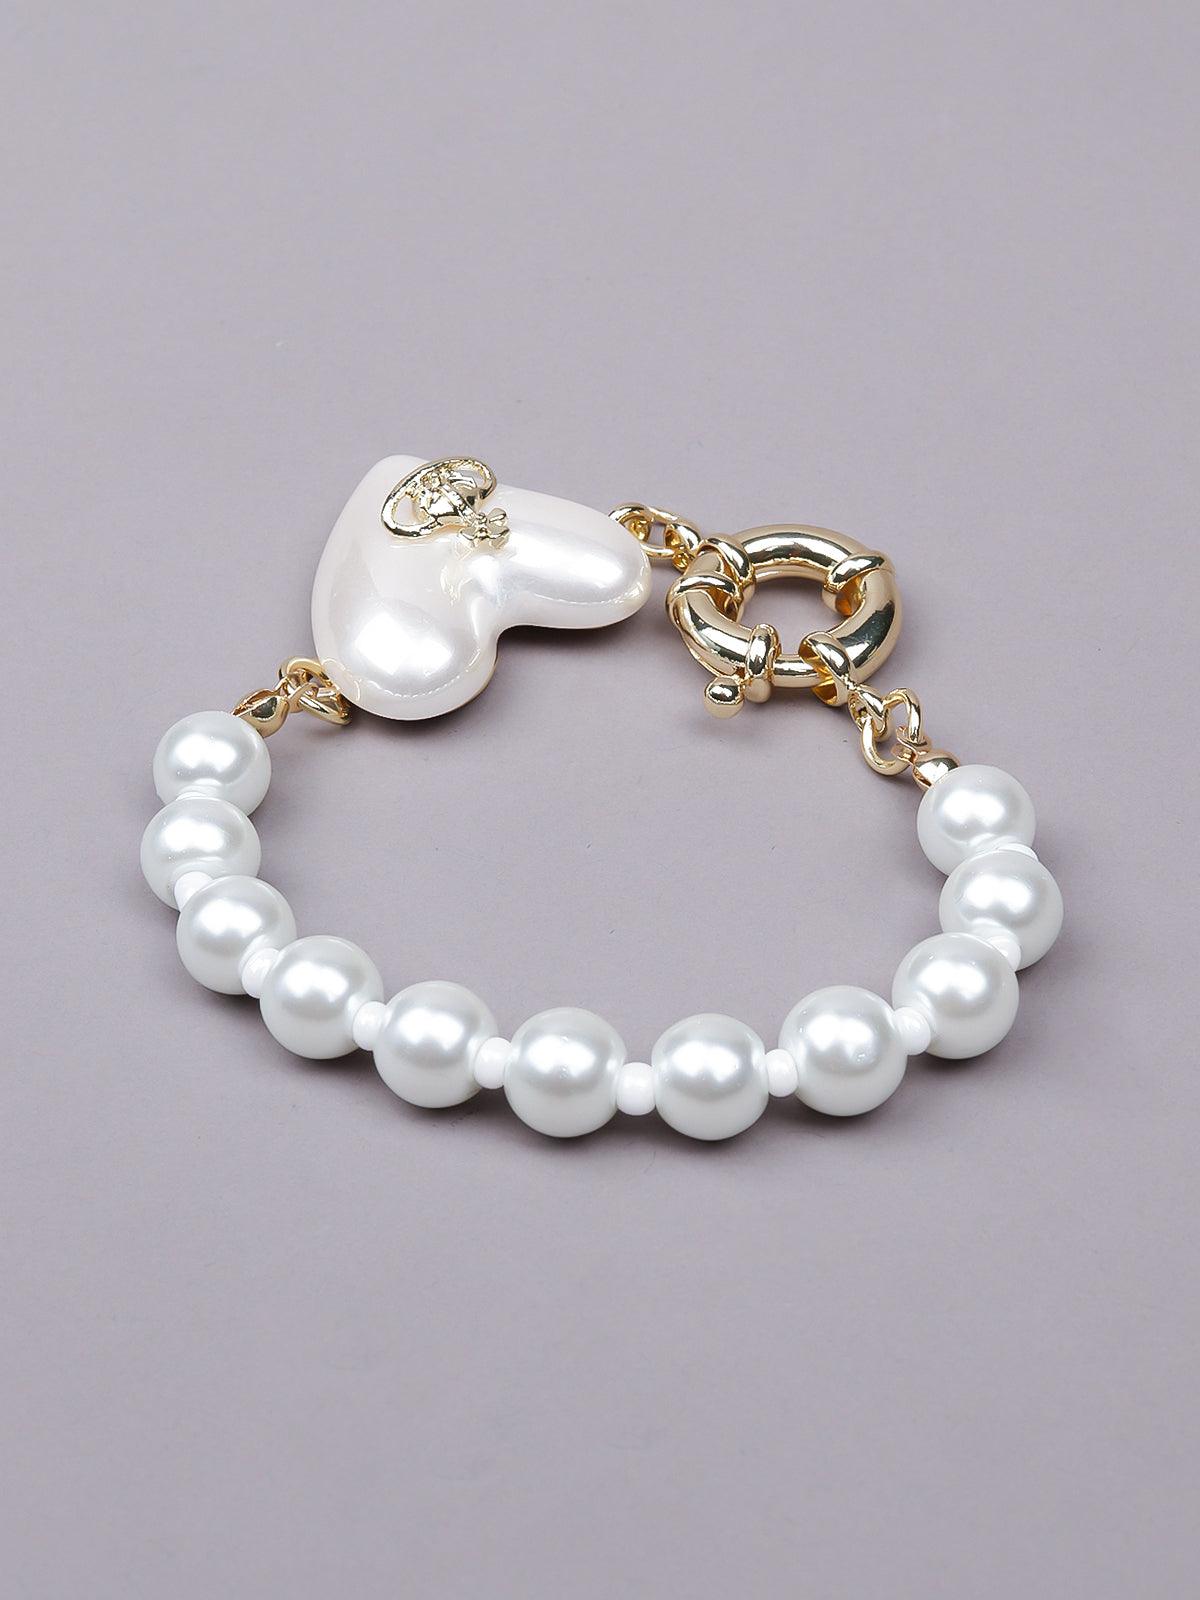 Cute pearl embellished with a heart bracelet - Odette